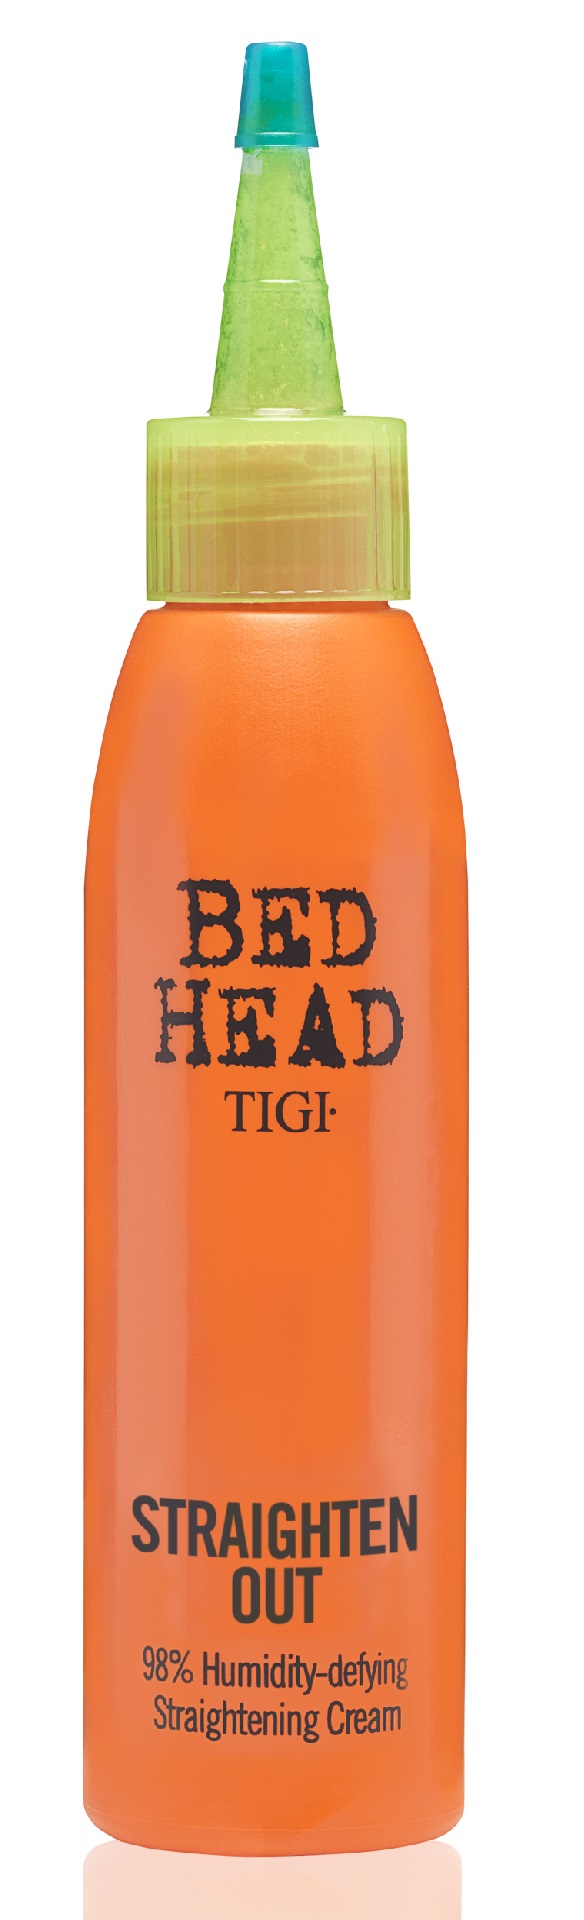 TIGI Bed Head Straighten Out 120ml